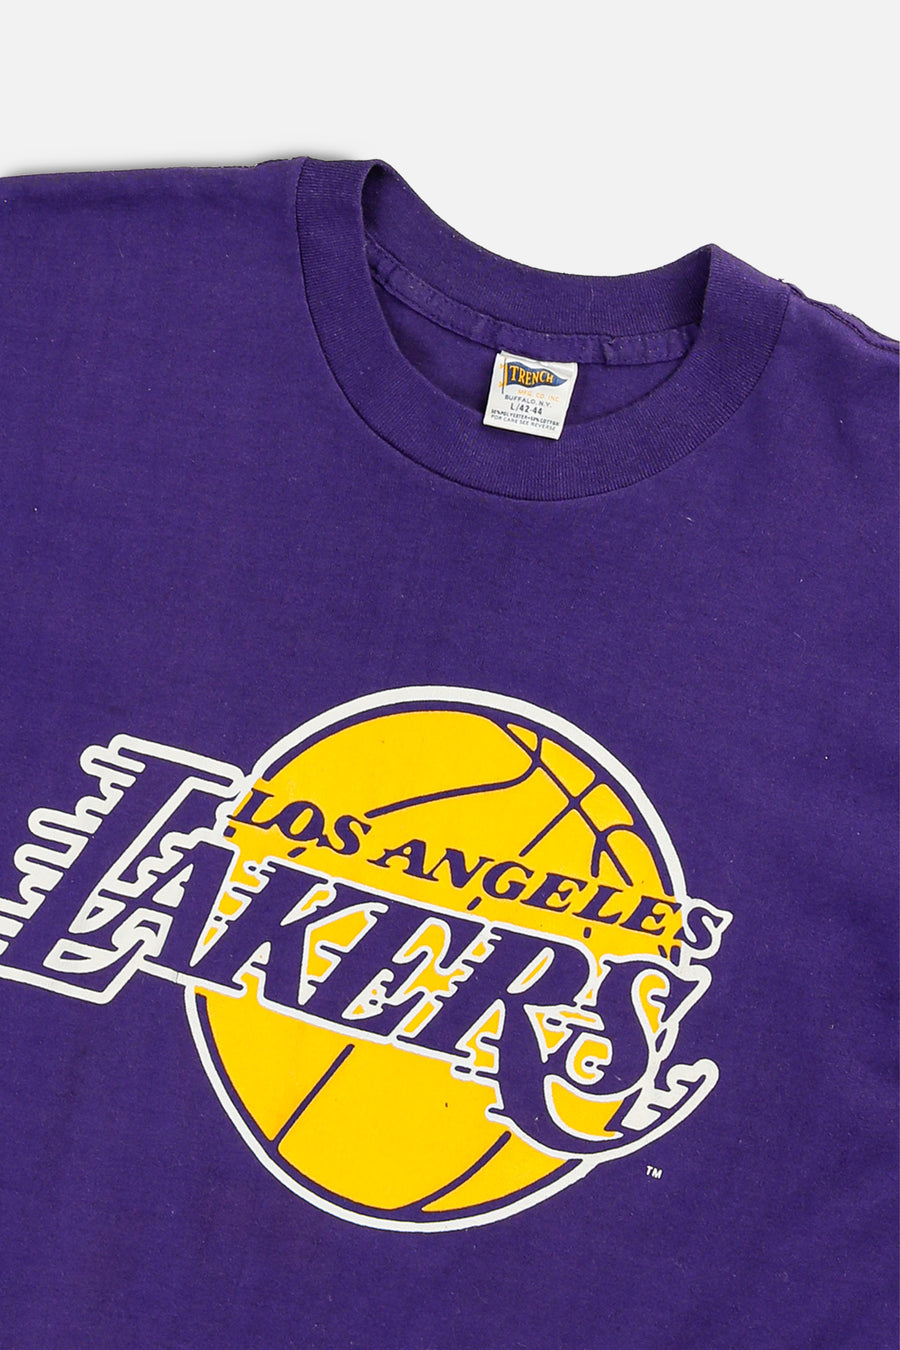 Vintage LA Lakers NBA Tee - Women's S